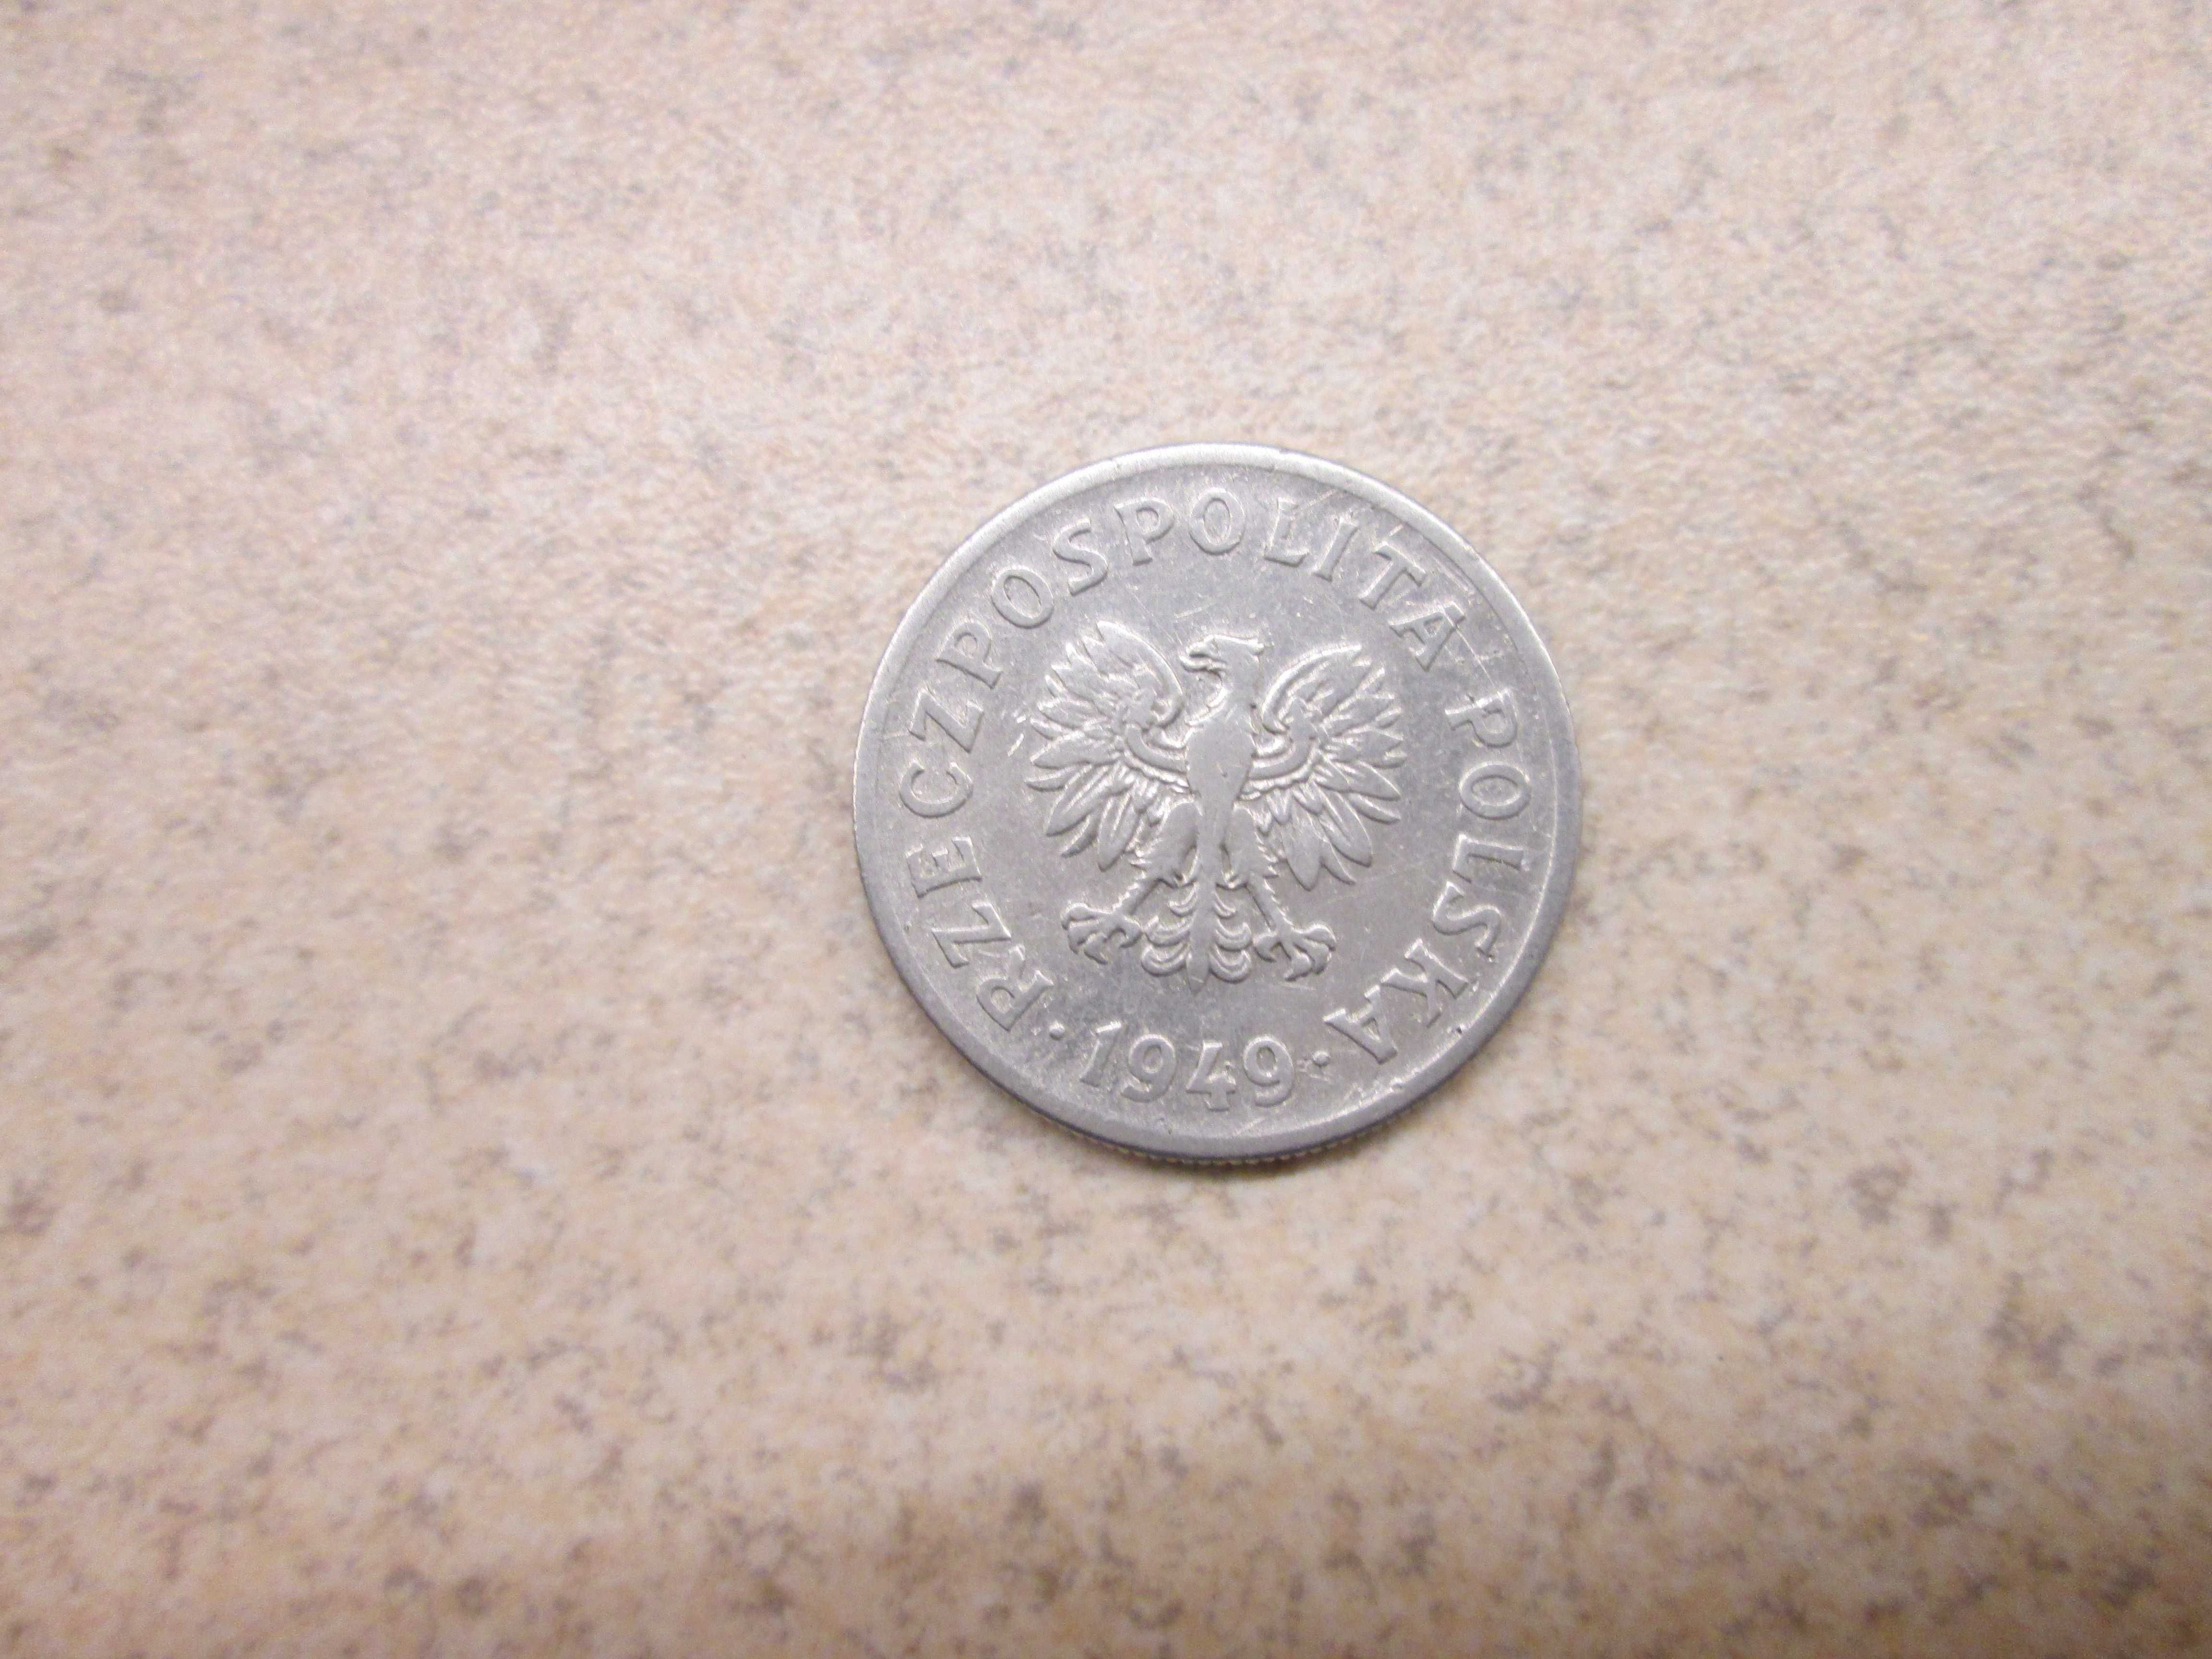 Moneta 50 groszy z roku 1949. OB034